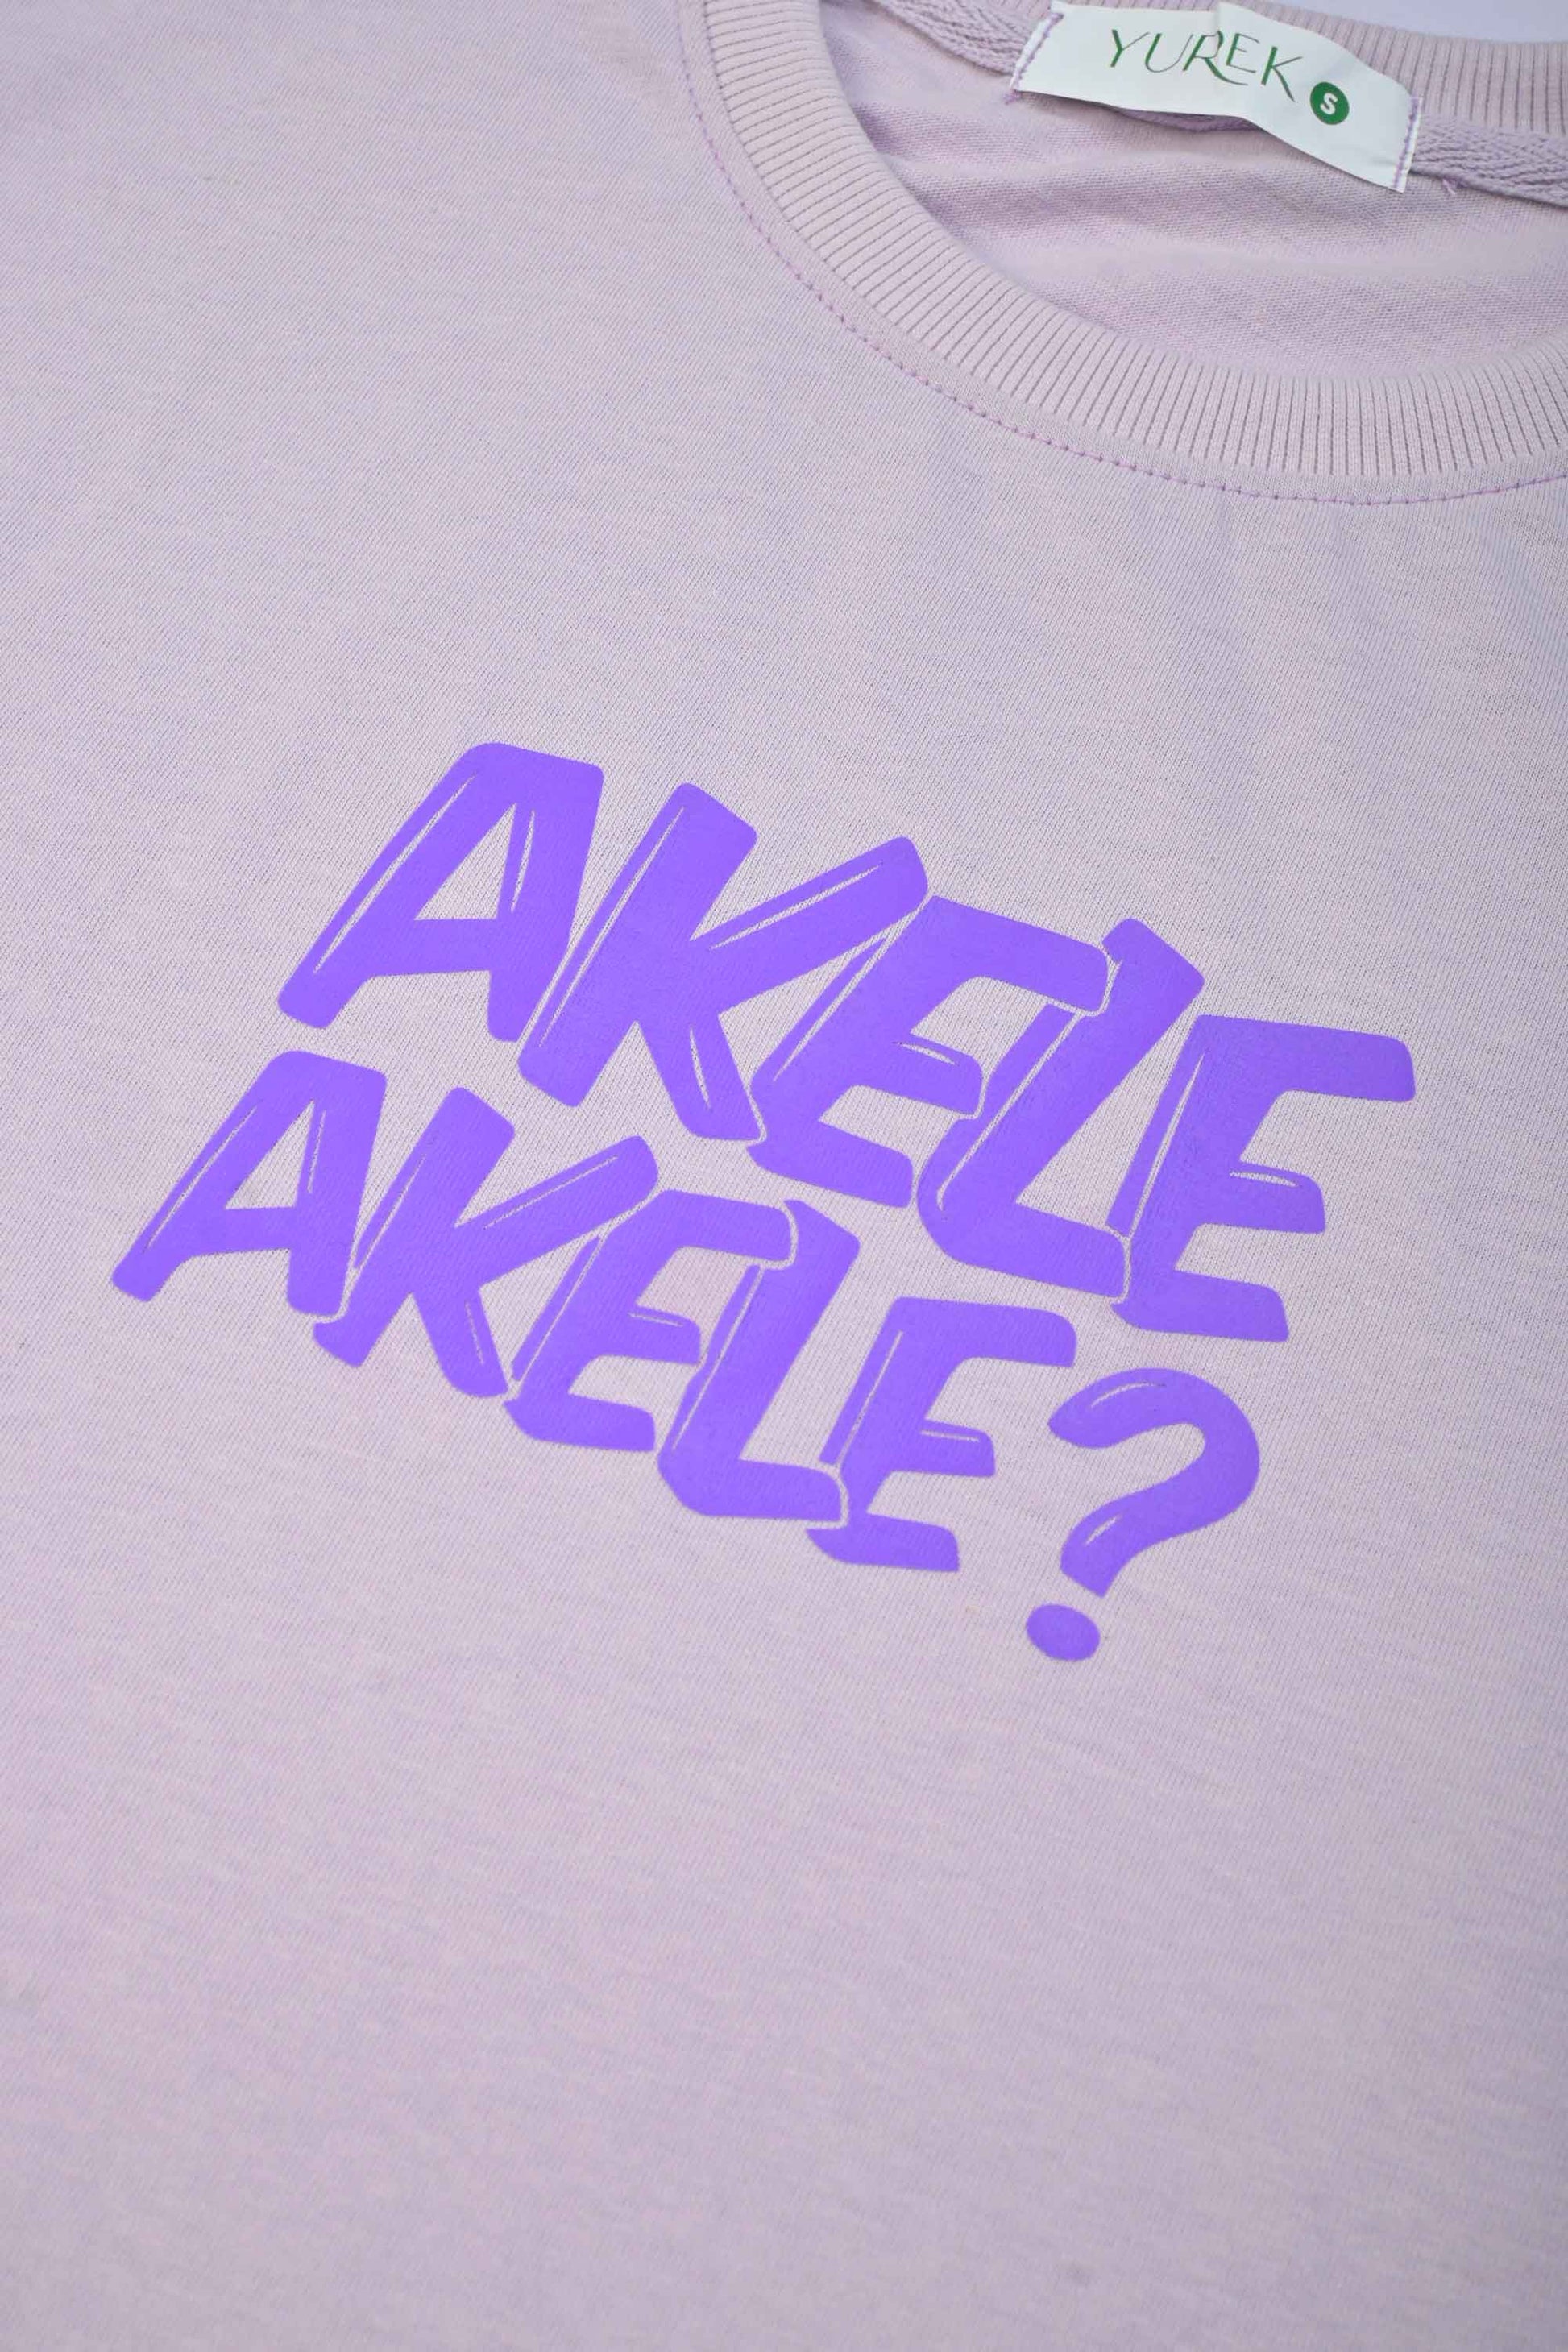 Yurek Men's Akele Akele Printed Crew Neck Tee Shirt Men's Tee Shirt Umar Atique 